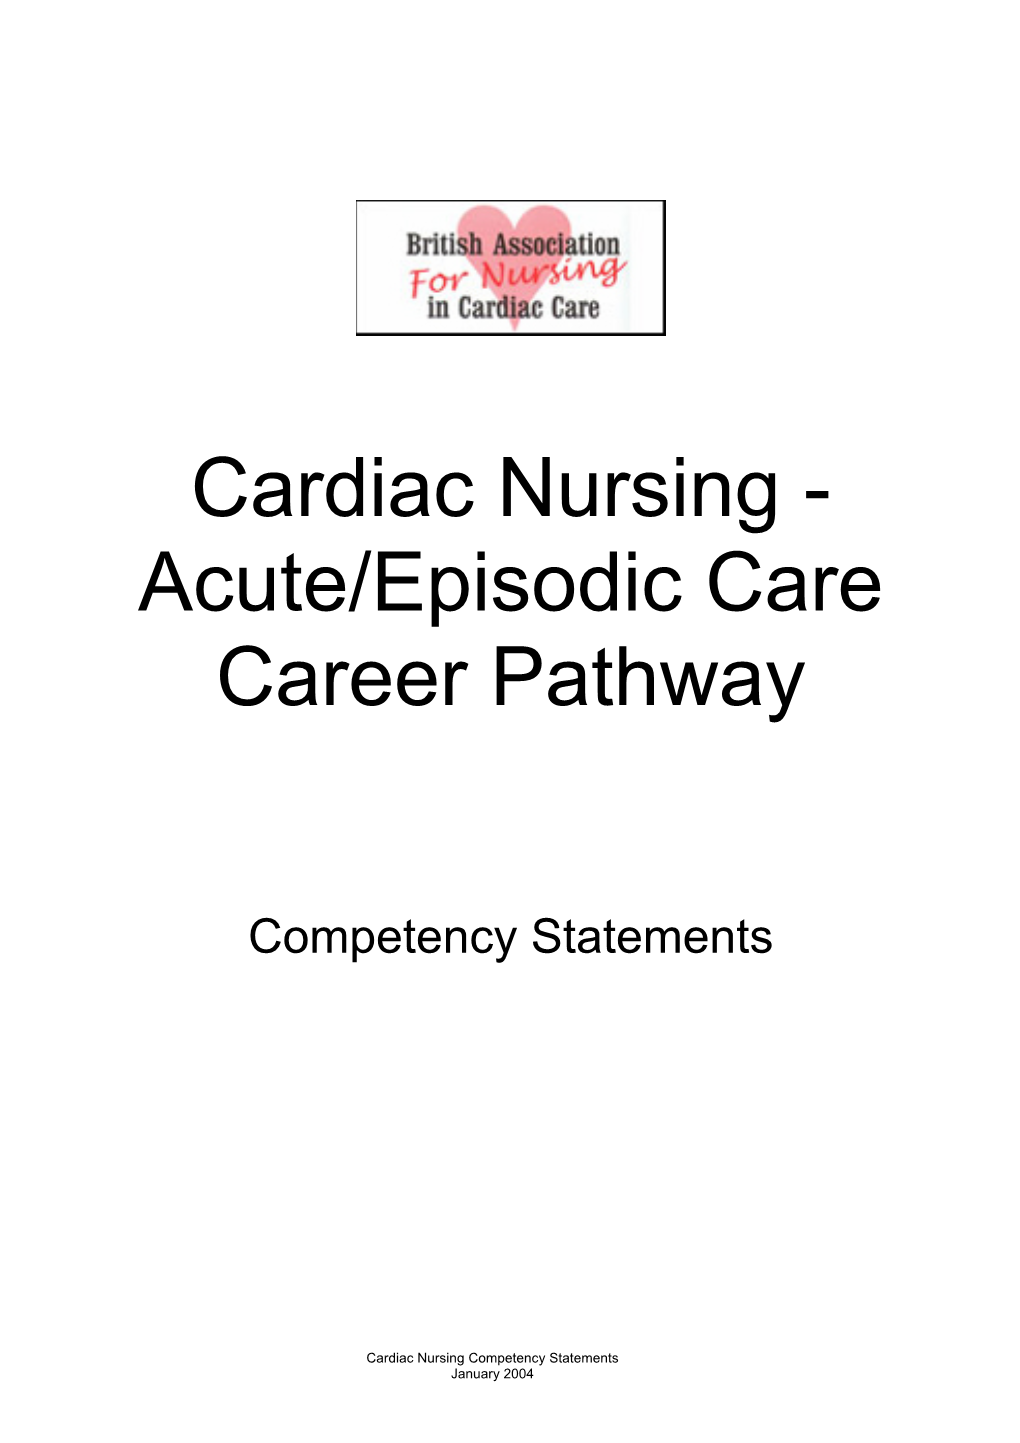 Cardiac Nursing - Acute/Episodic Care Career Pathway